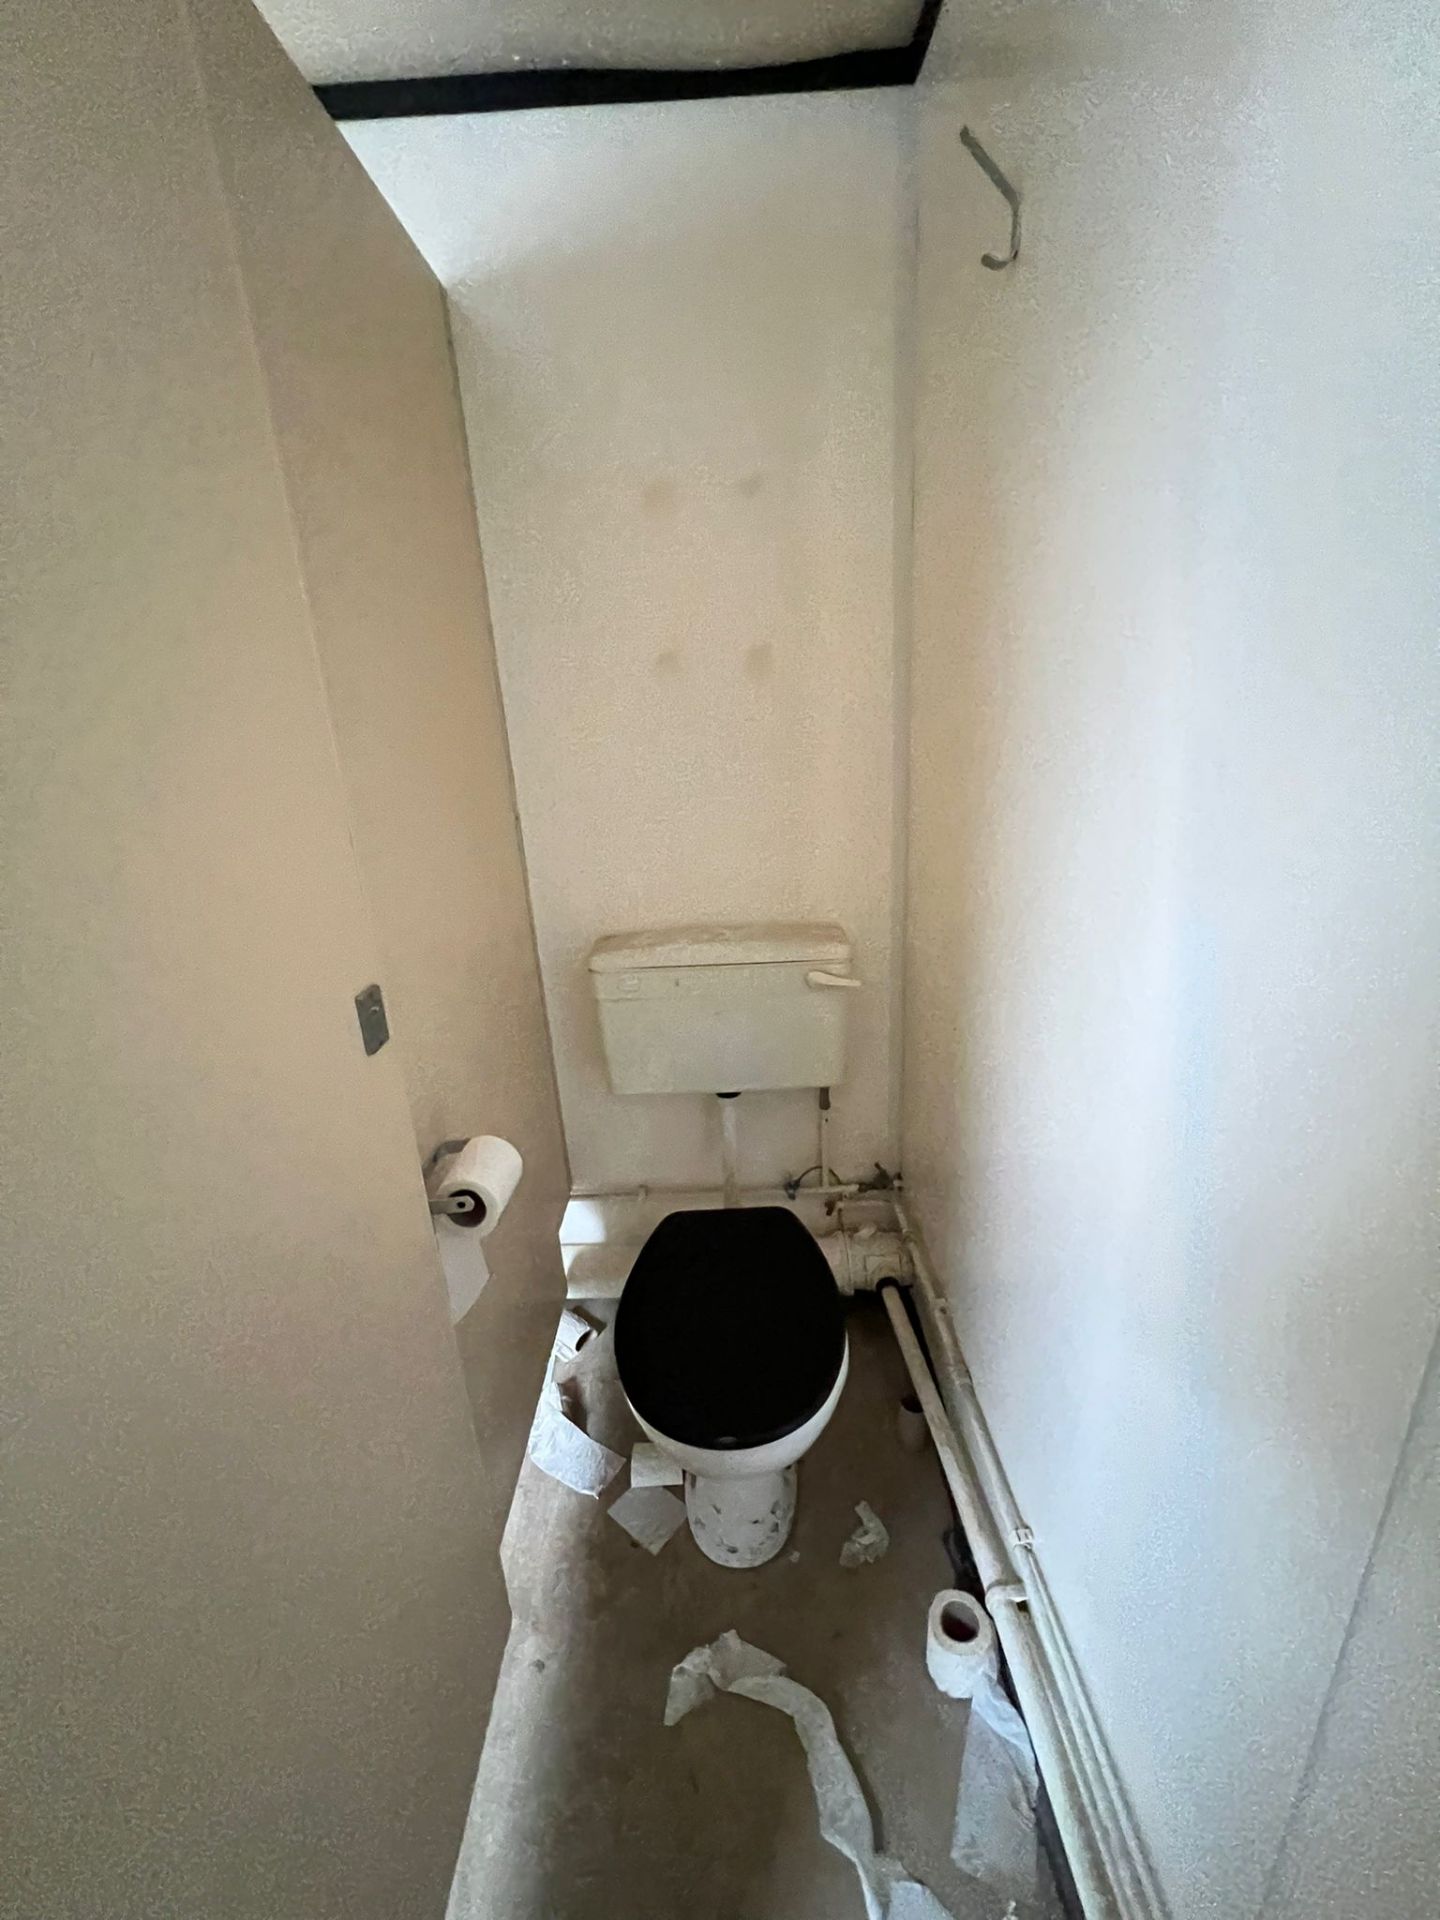 2 + 1 male female toilet block - Image 10 of 11